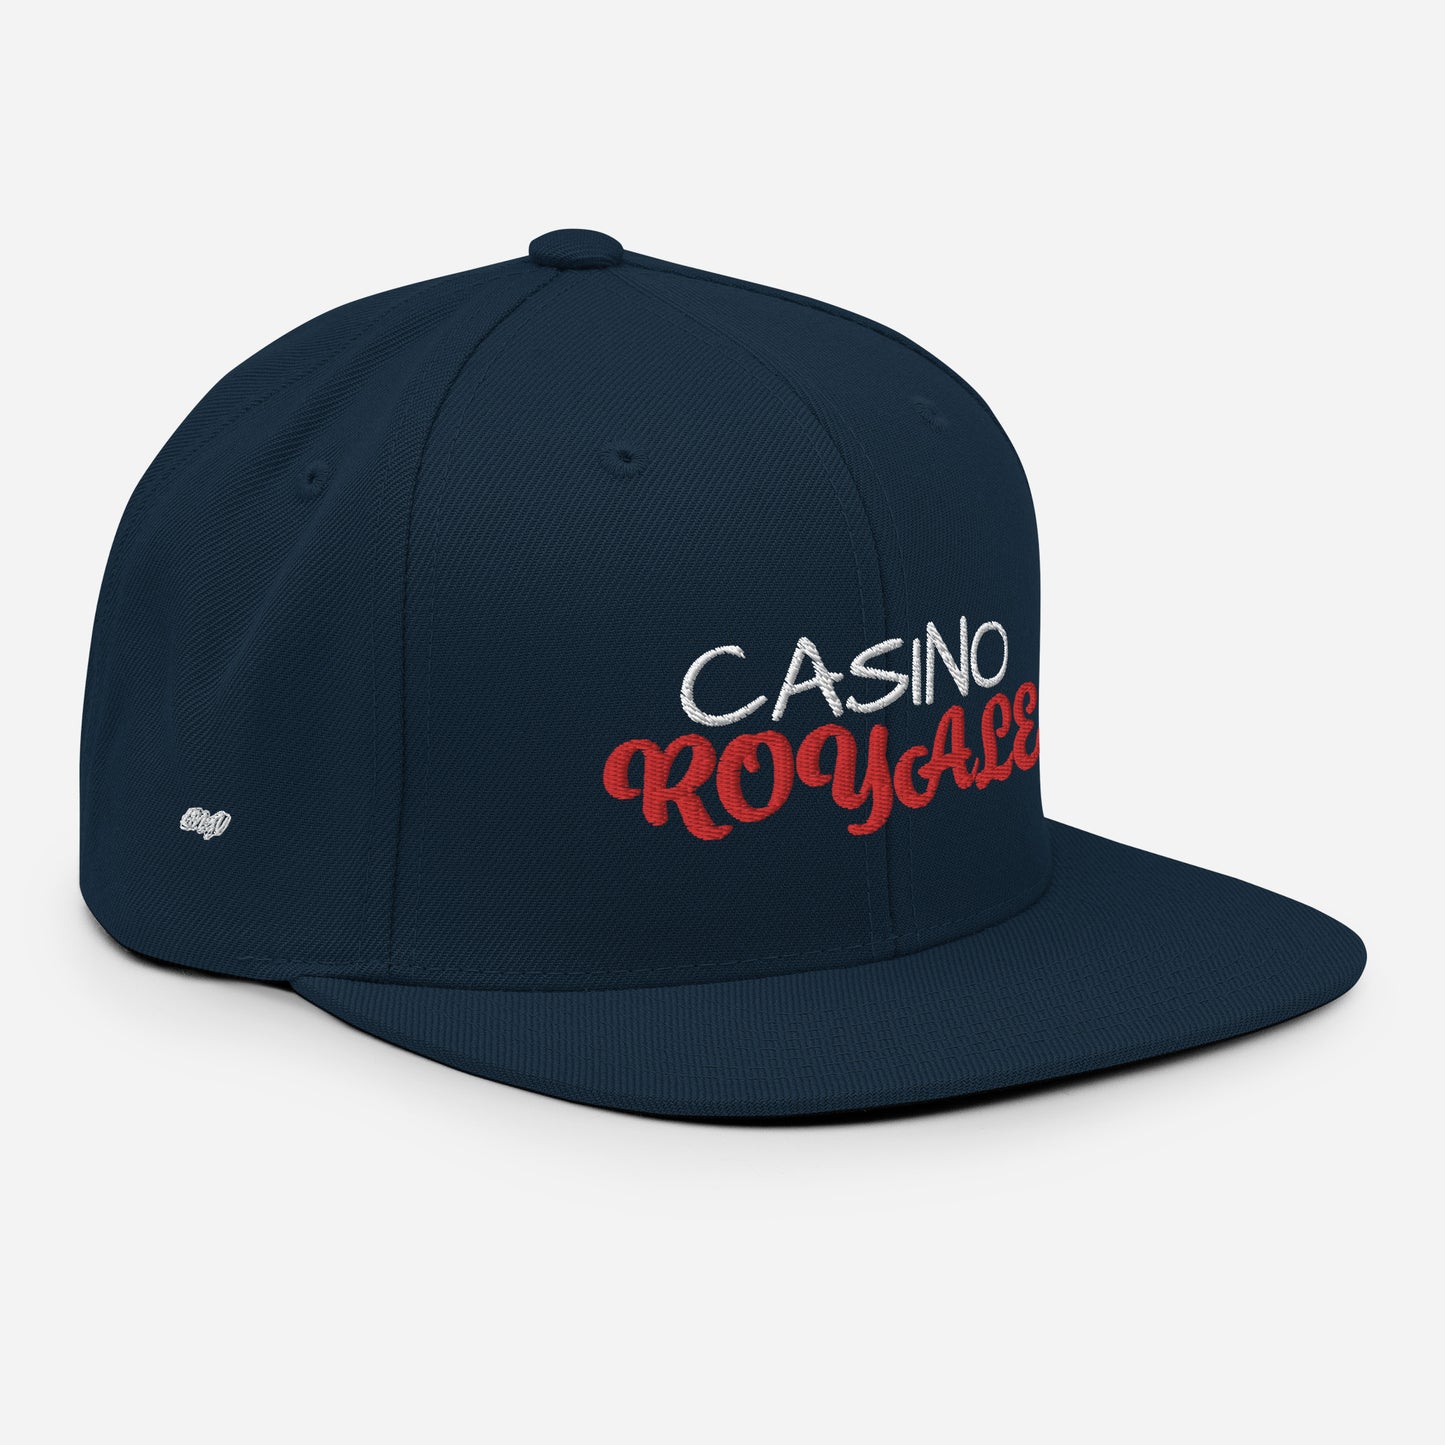 Casino Royale, Exclusive Knqv Snapback Hat